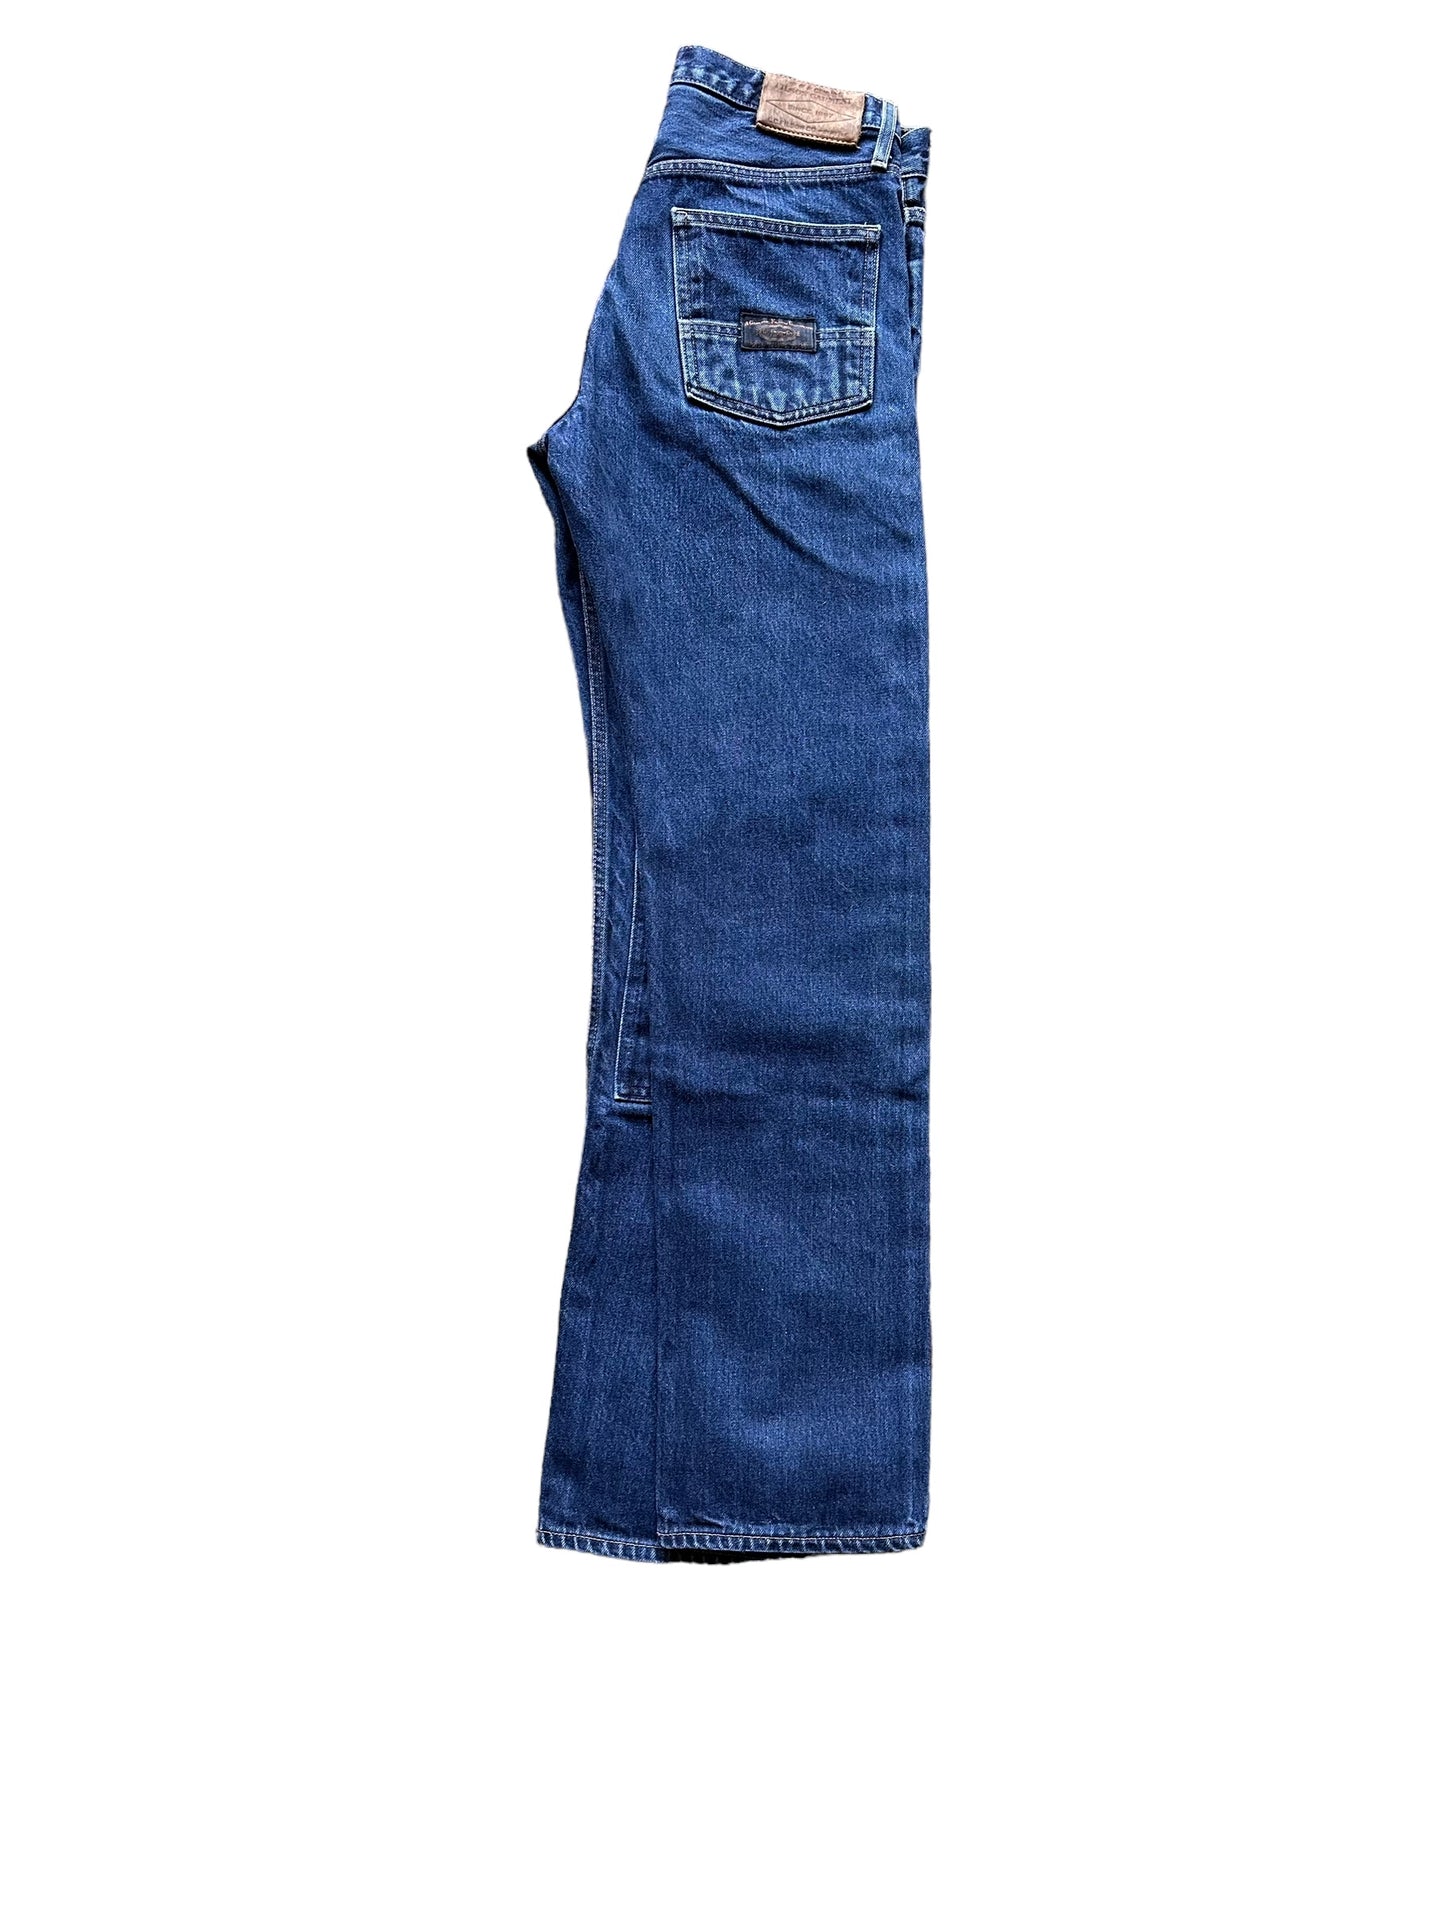 Side Profile View of Filson Denim Doublefront Jeans W30 |  Filson Double Knees | Filson Denim Workwear Seattle